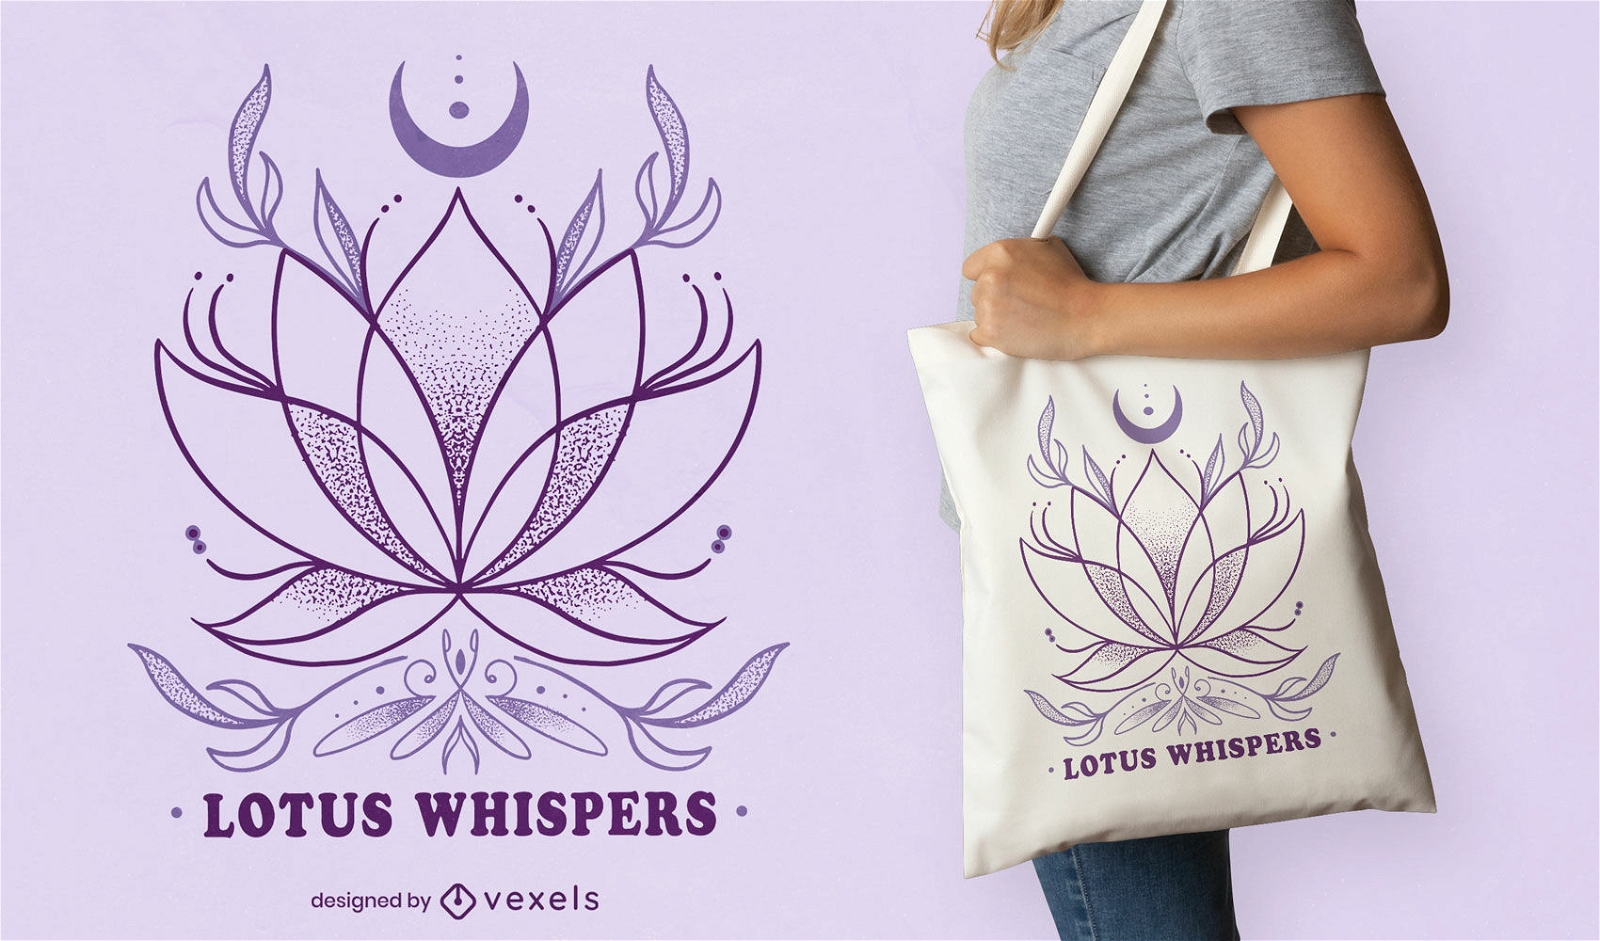 Lotus whispers tote bag design